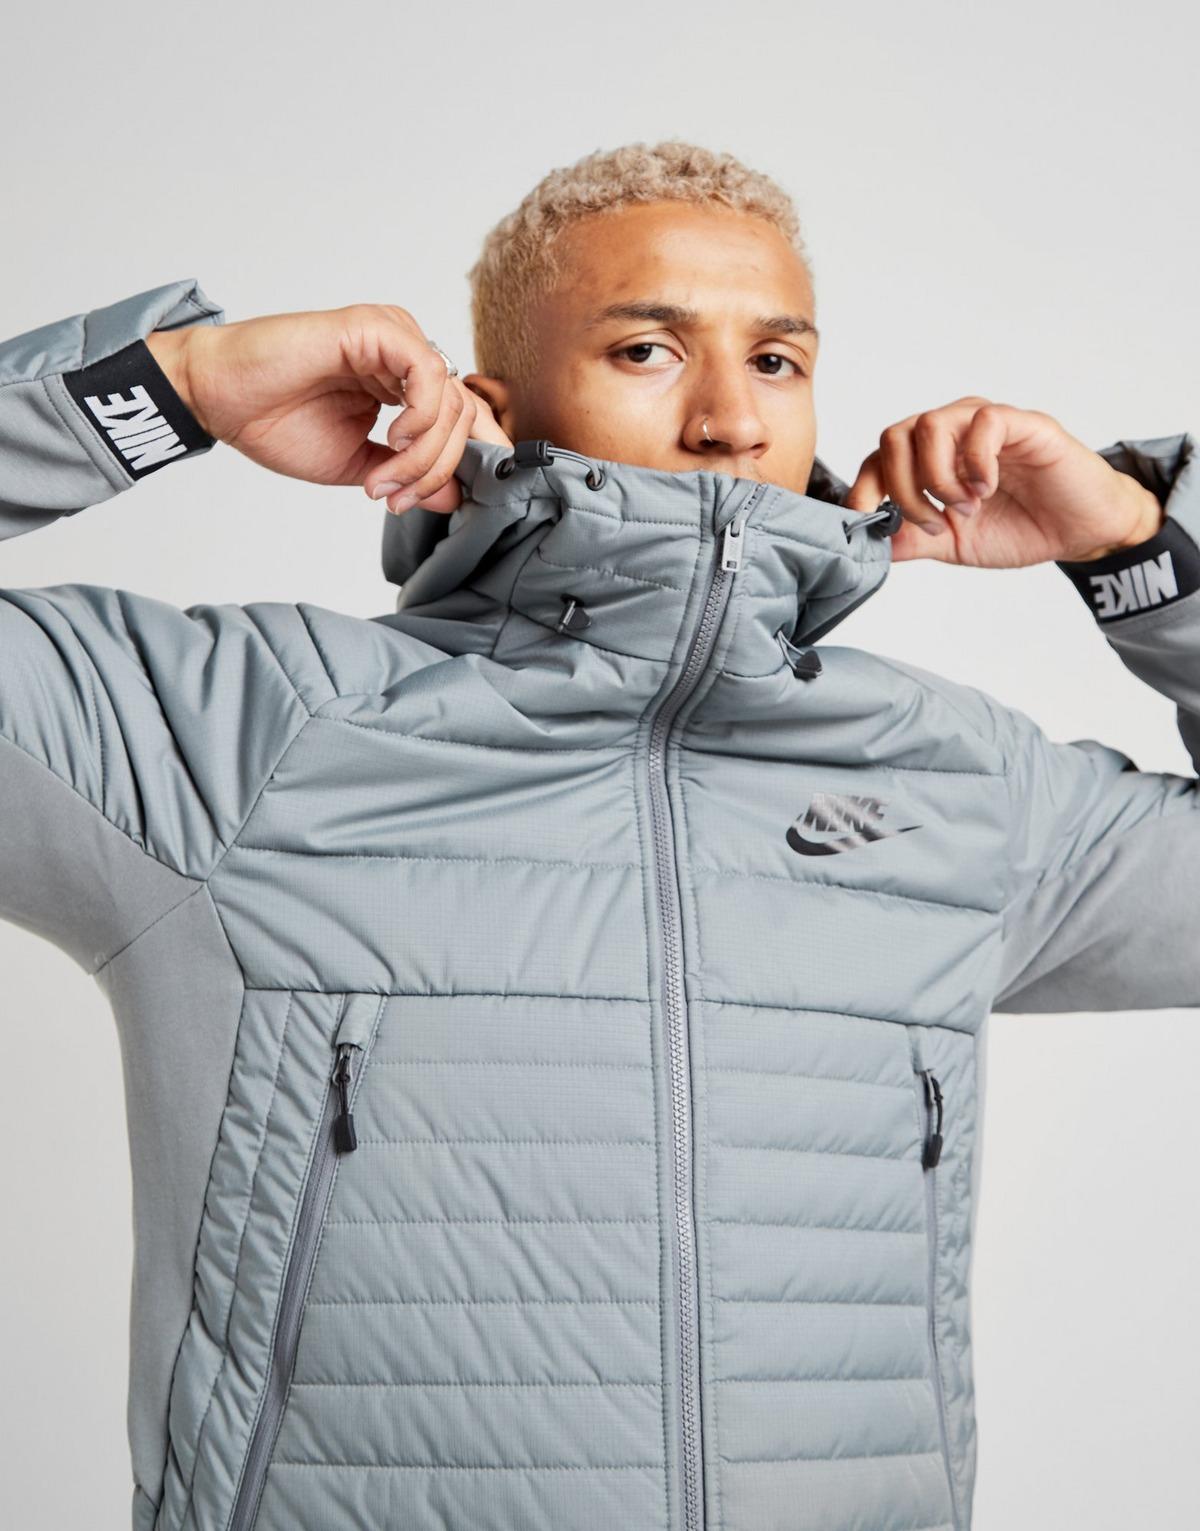 Buy > nike chaqueta sportswear hybrid > in stock